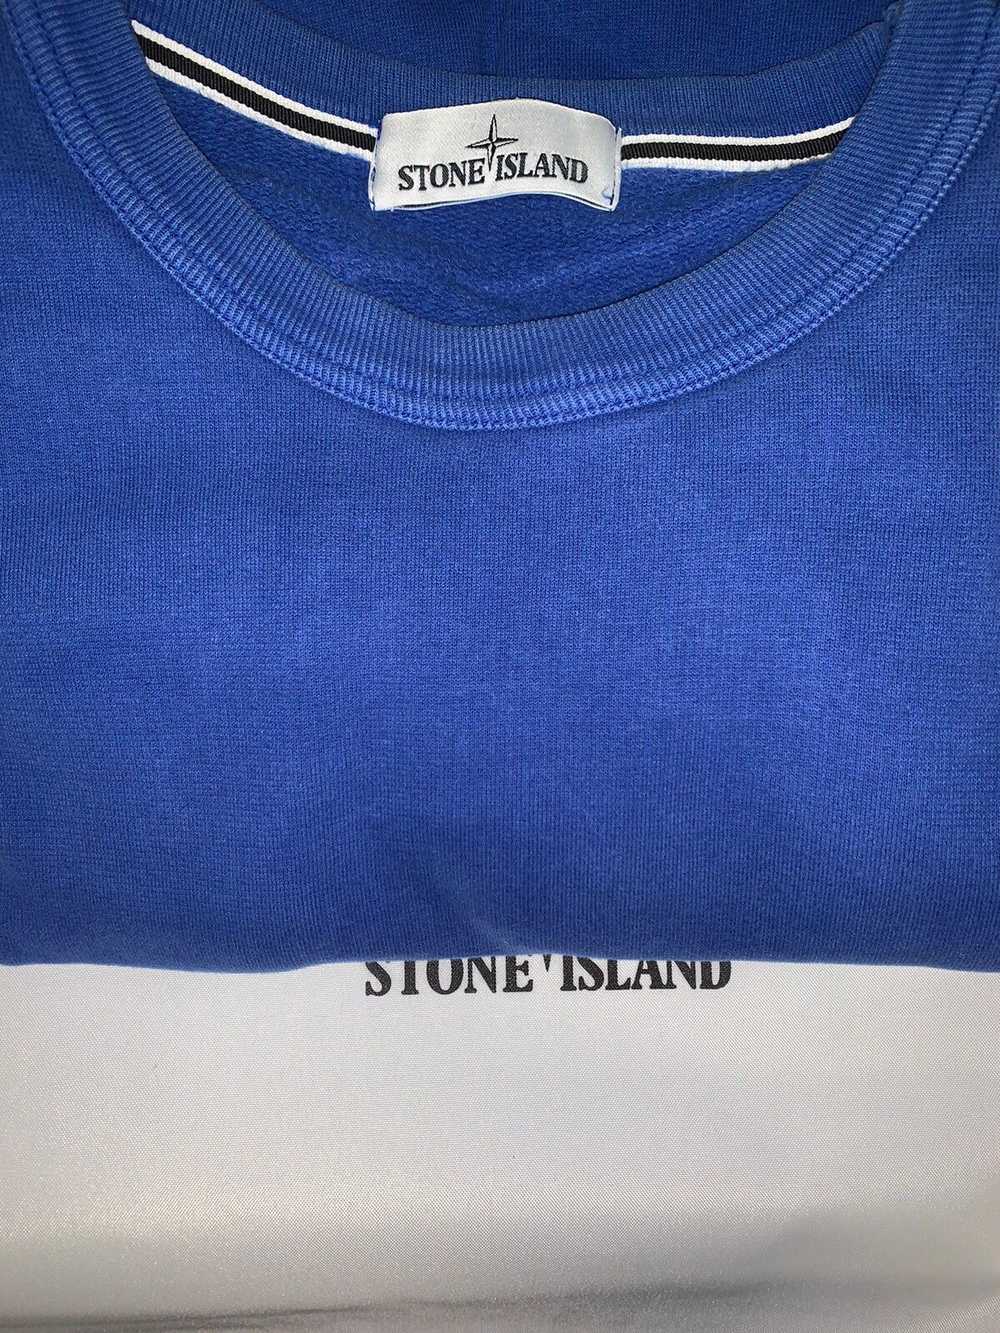 Stone Island Stone Island Sweater - image 1